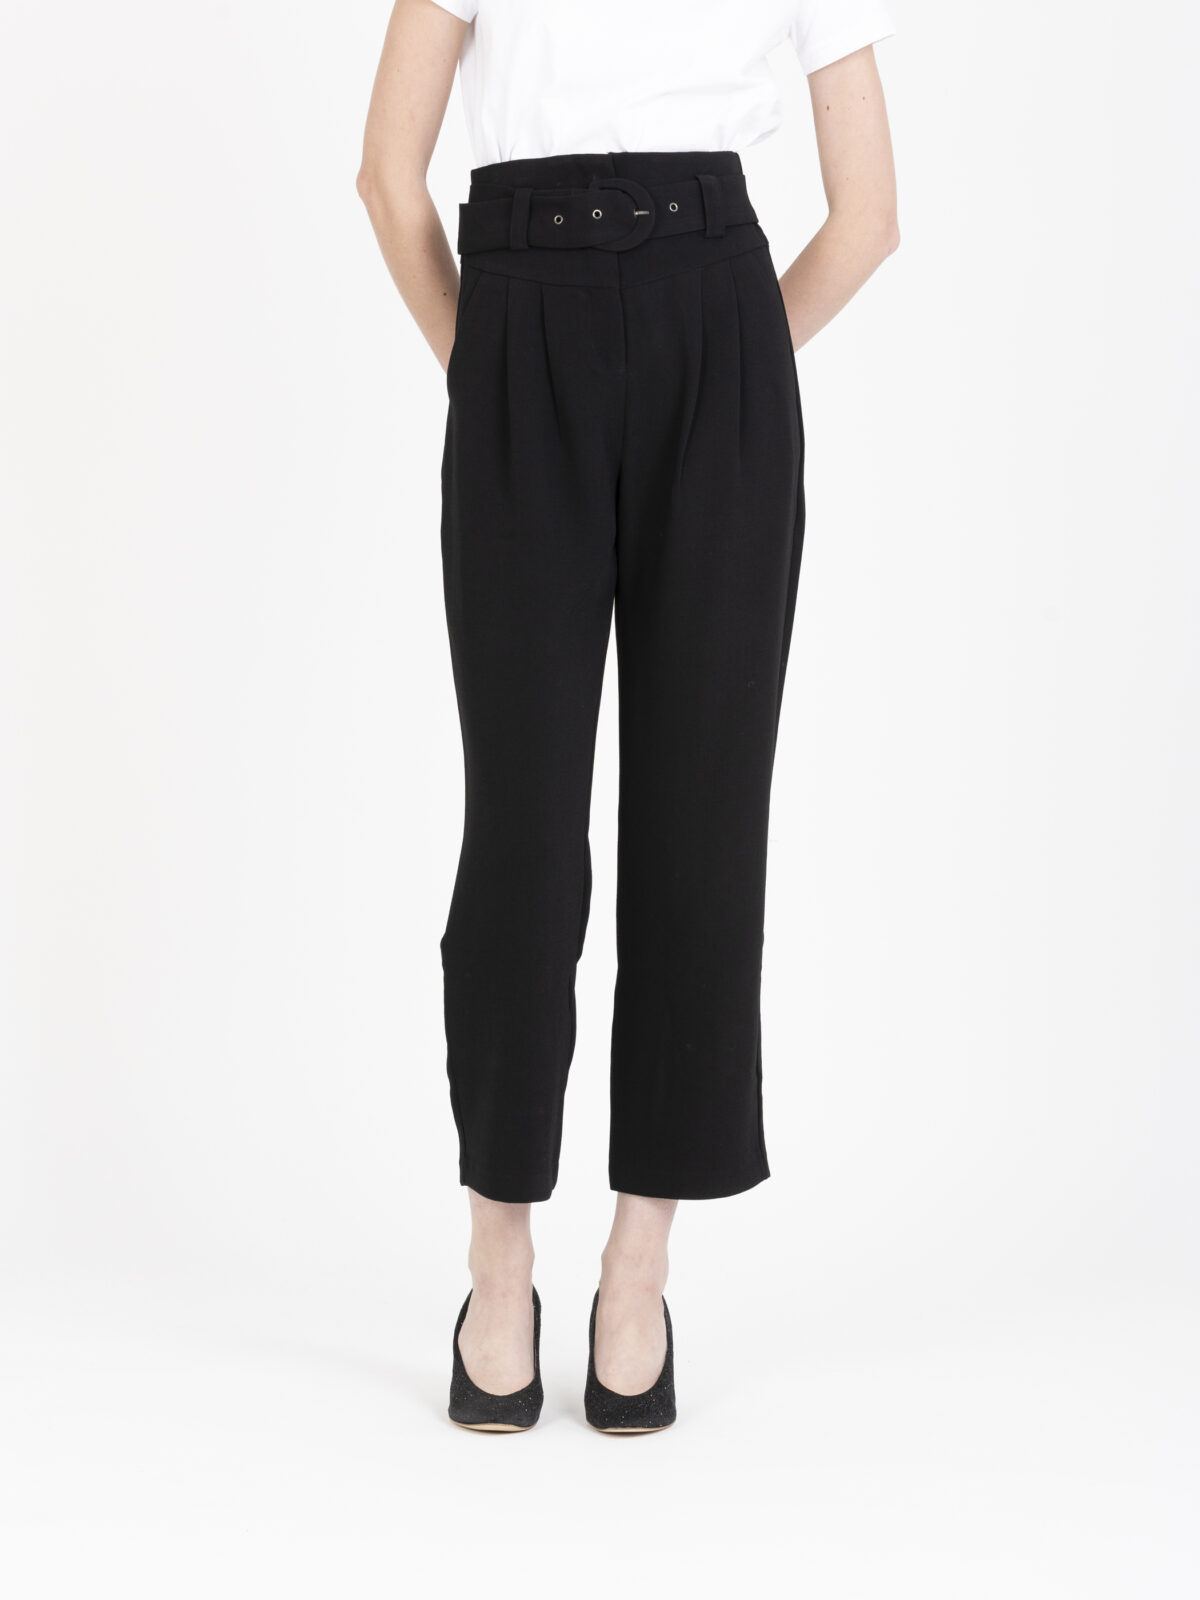 julio-black-pants-pleats-belted-high-waisted-suncoo-matchboxathens